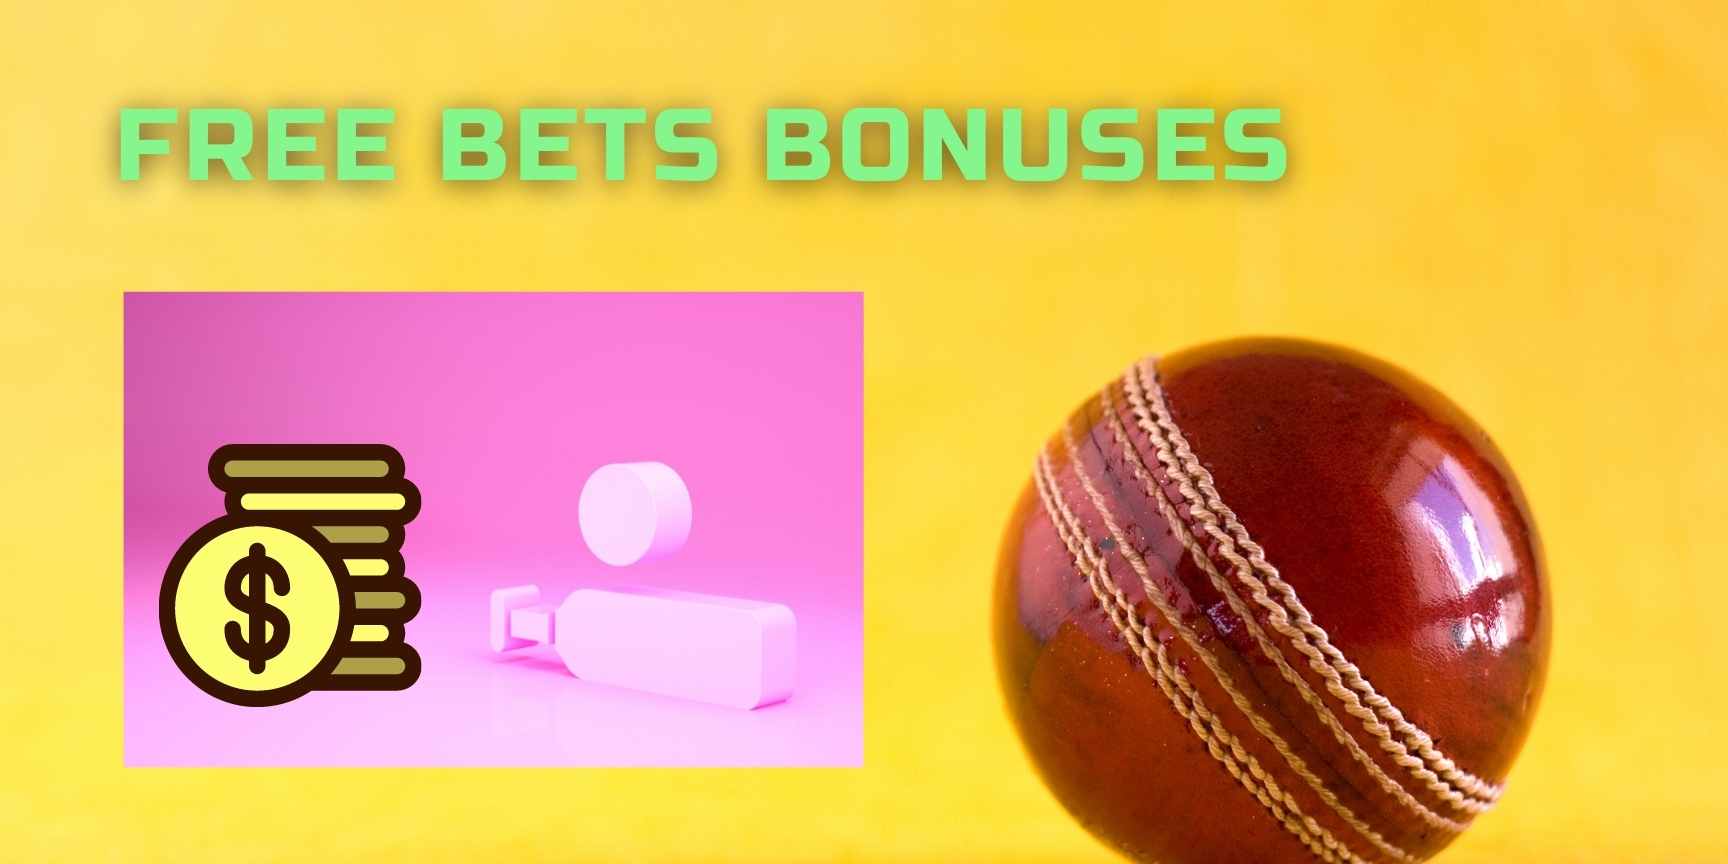 bets bonuses